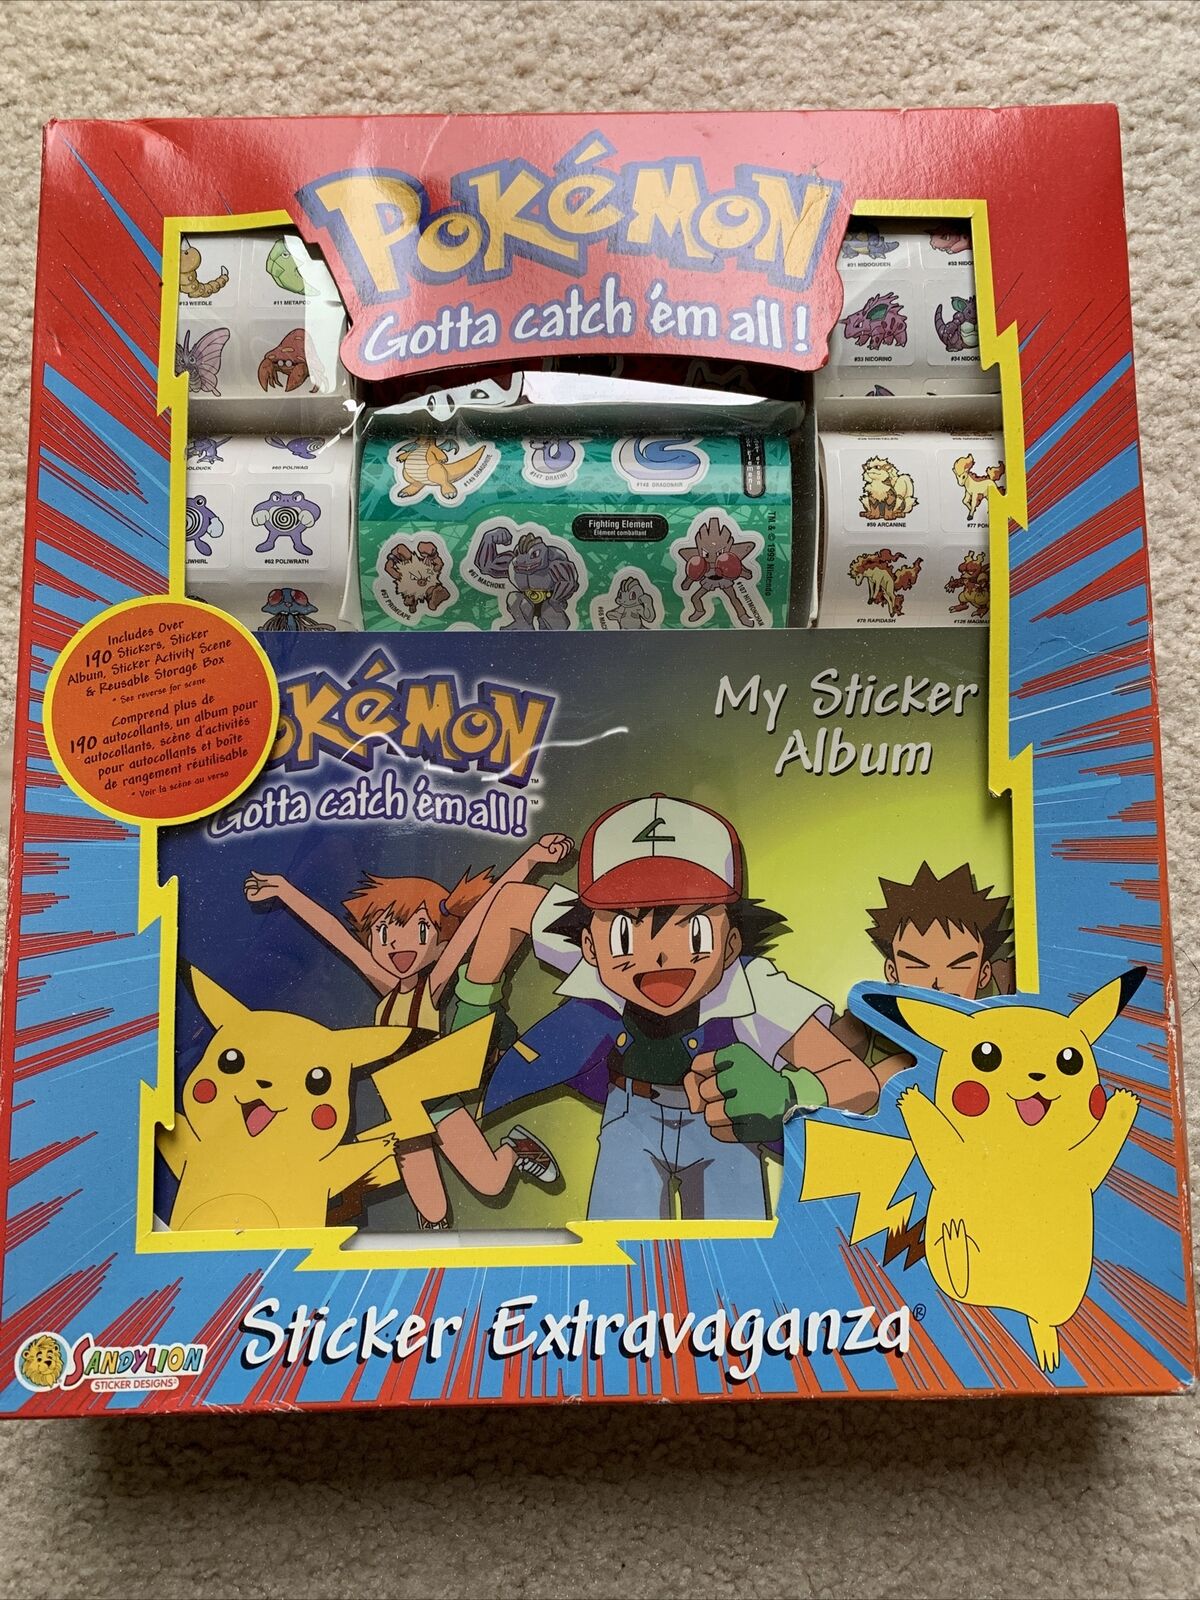 Vintage 90’s Nintendo Pokémon STICKER EXTRAVAGANZA w/ Album - Read